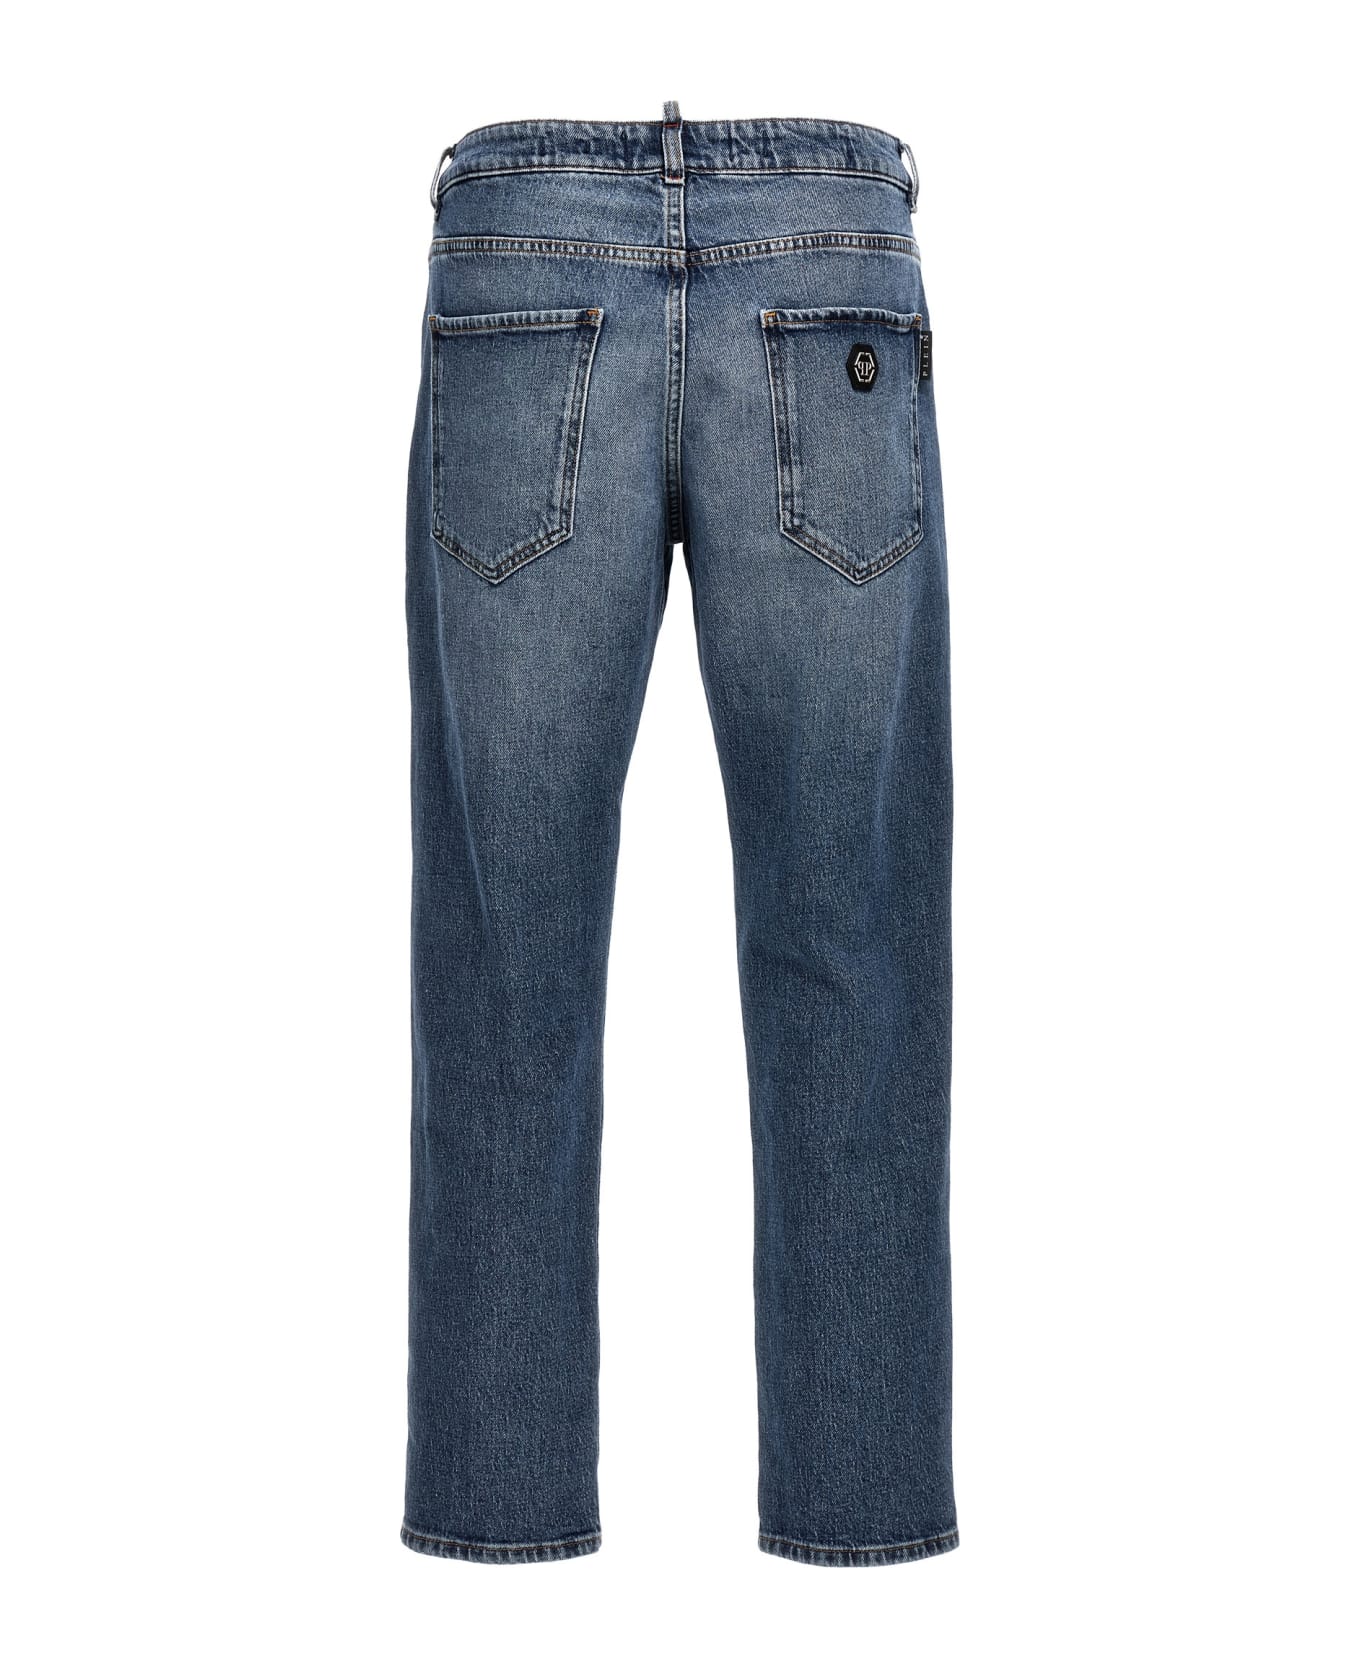 Philipp Plein Denim Jeans - Blu lavato デニム